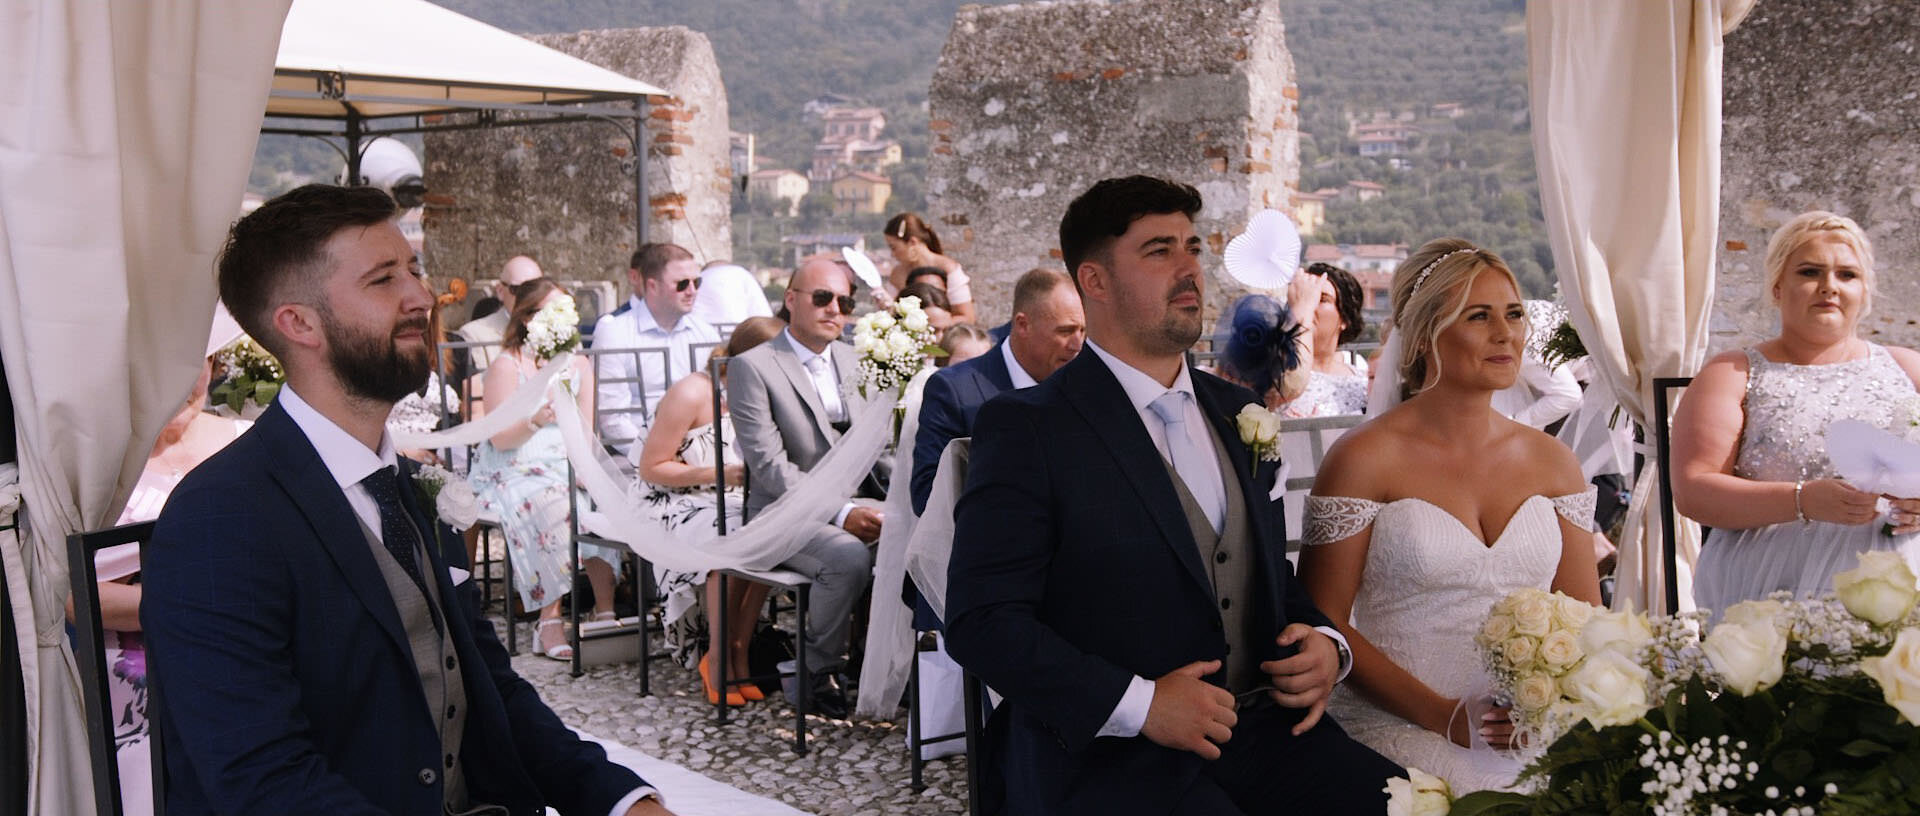 Laura & Reuben Desitnation Wedding in Malcesine Lake Garda 12.jpg